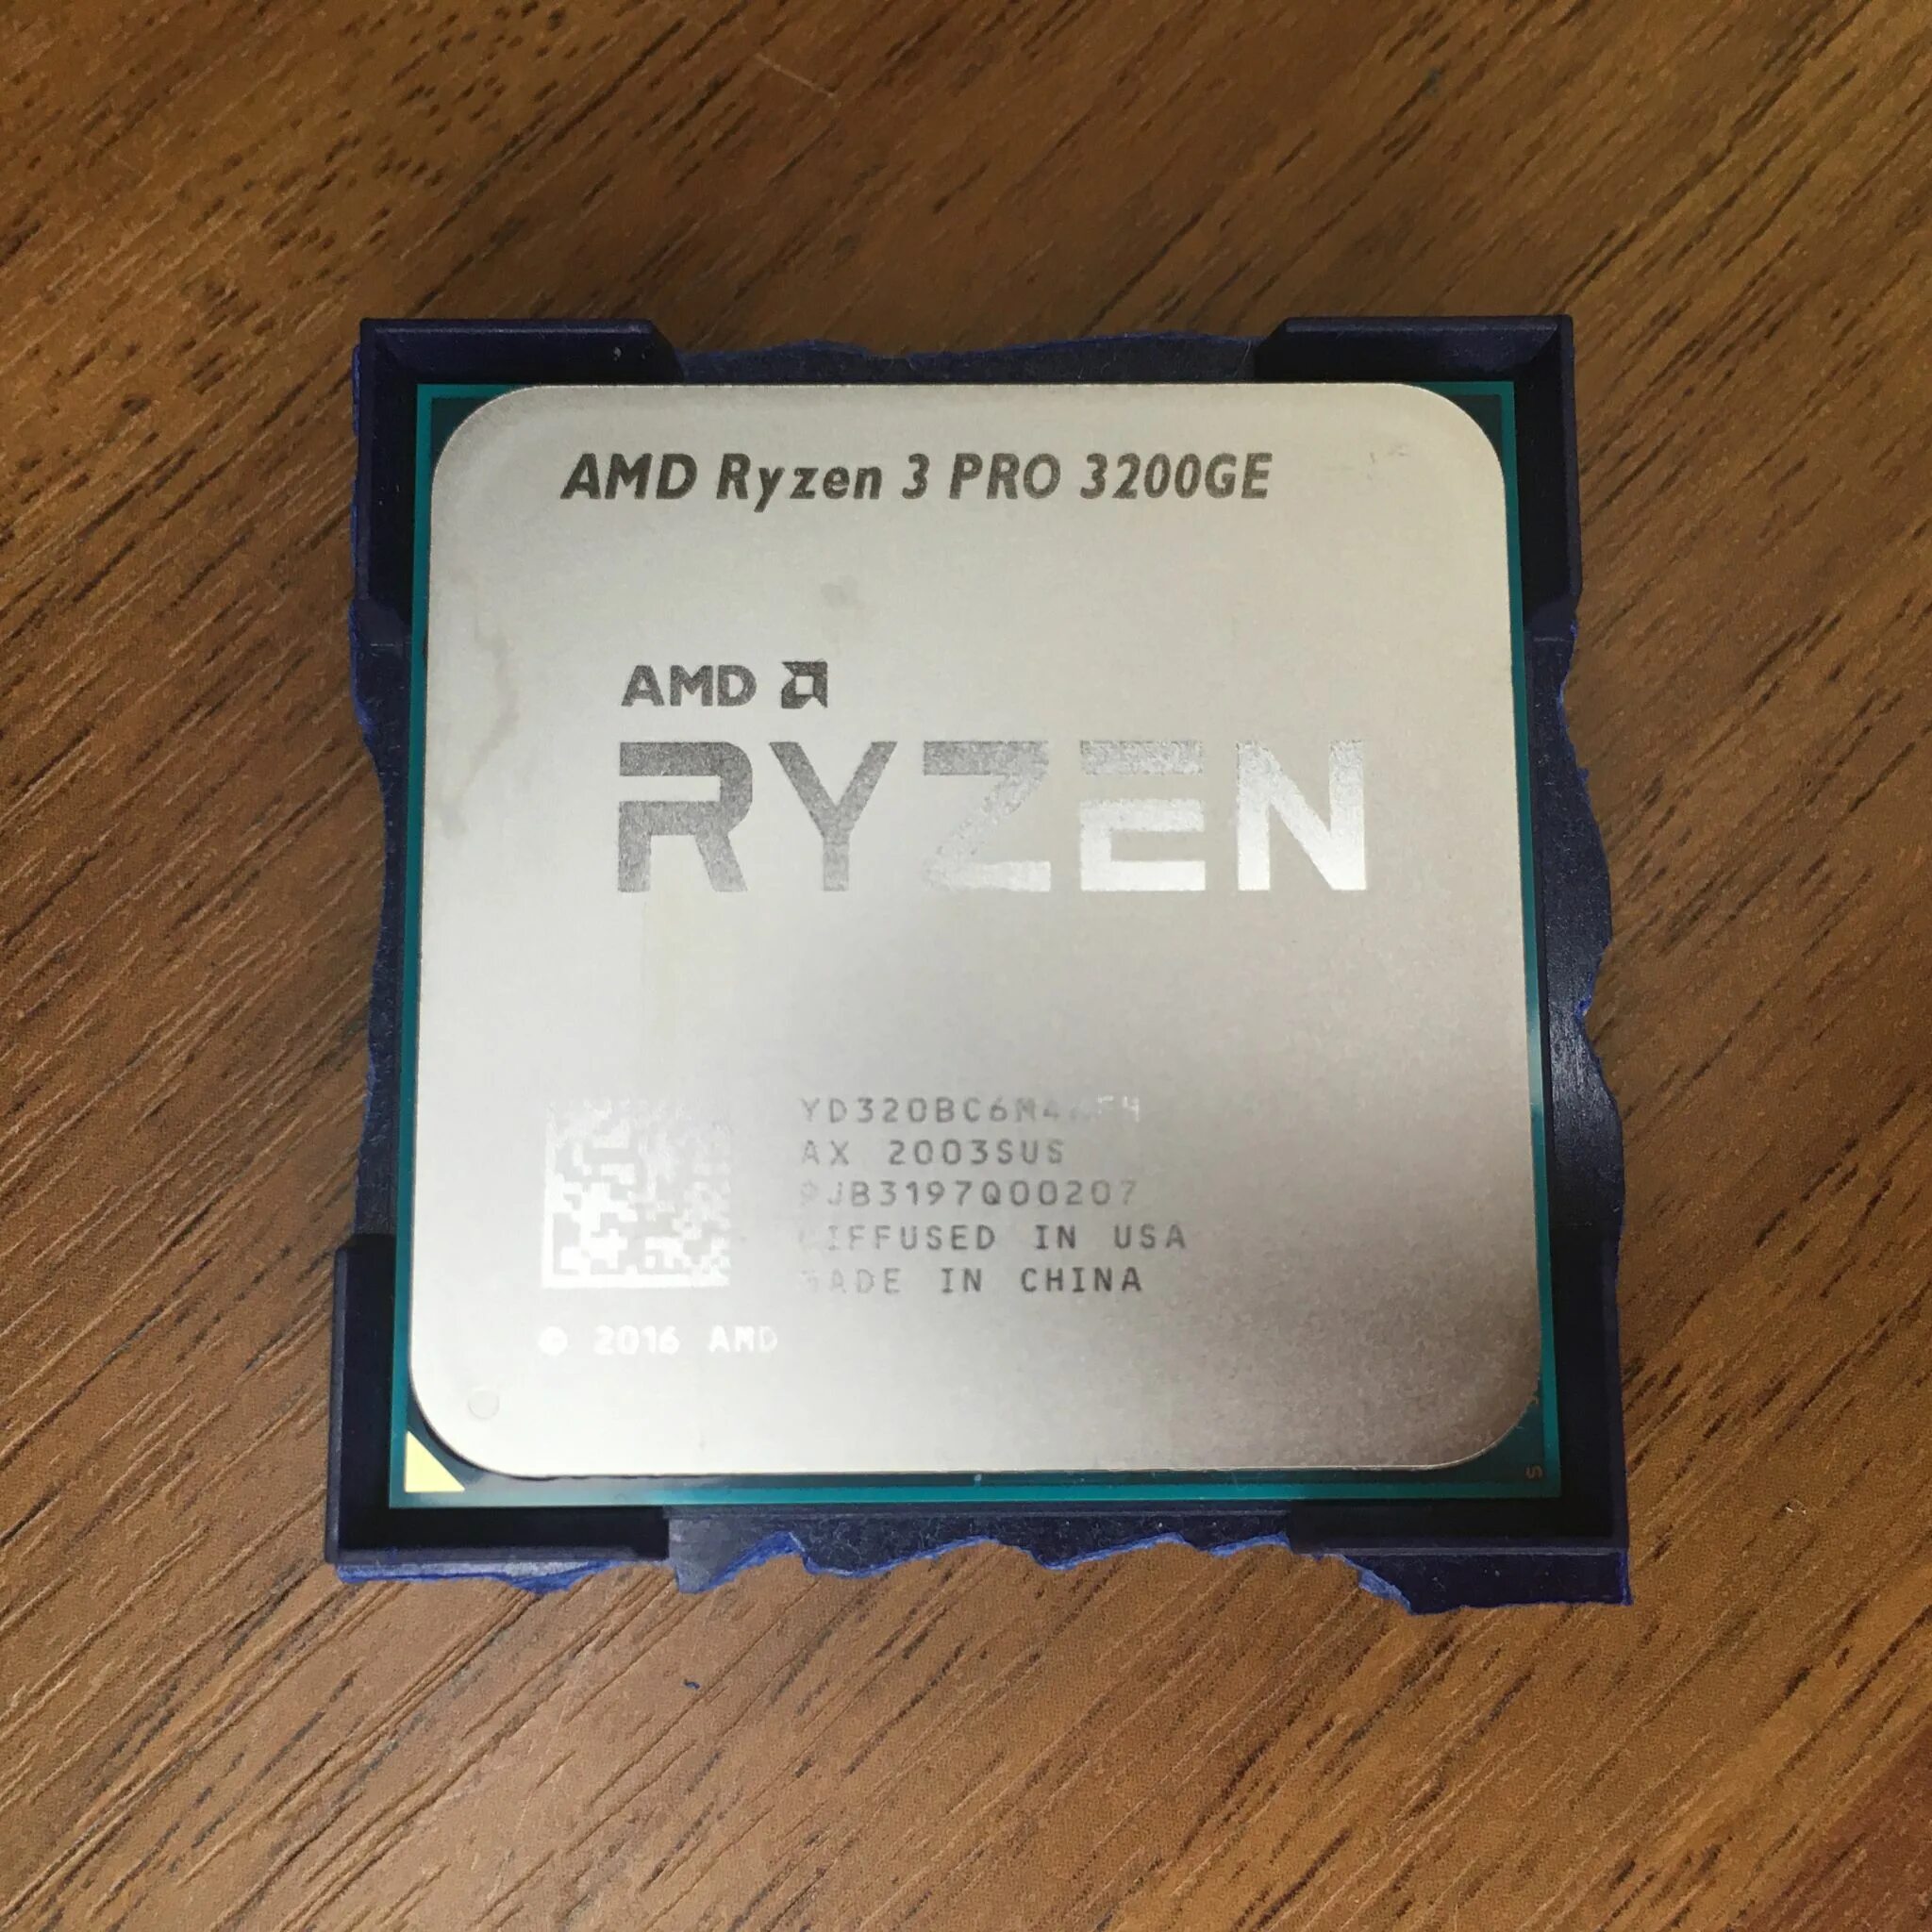 AMD Ryzen 3 Pro 3200g. Процессор Ryzen 3 Pro 1200. AMD Ryzen 3 Pro 3200ge w/ Radeon Vega Graphics \. AMD Ryzen 3 Pro 3200g am4, 4 x 3600 МГЦ. Ryzen 3 pro 3200g